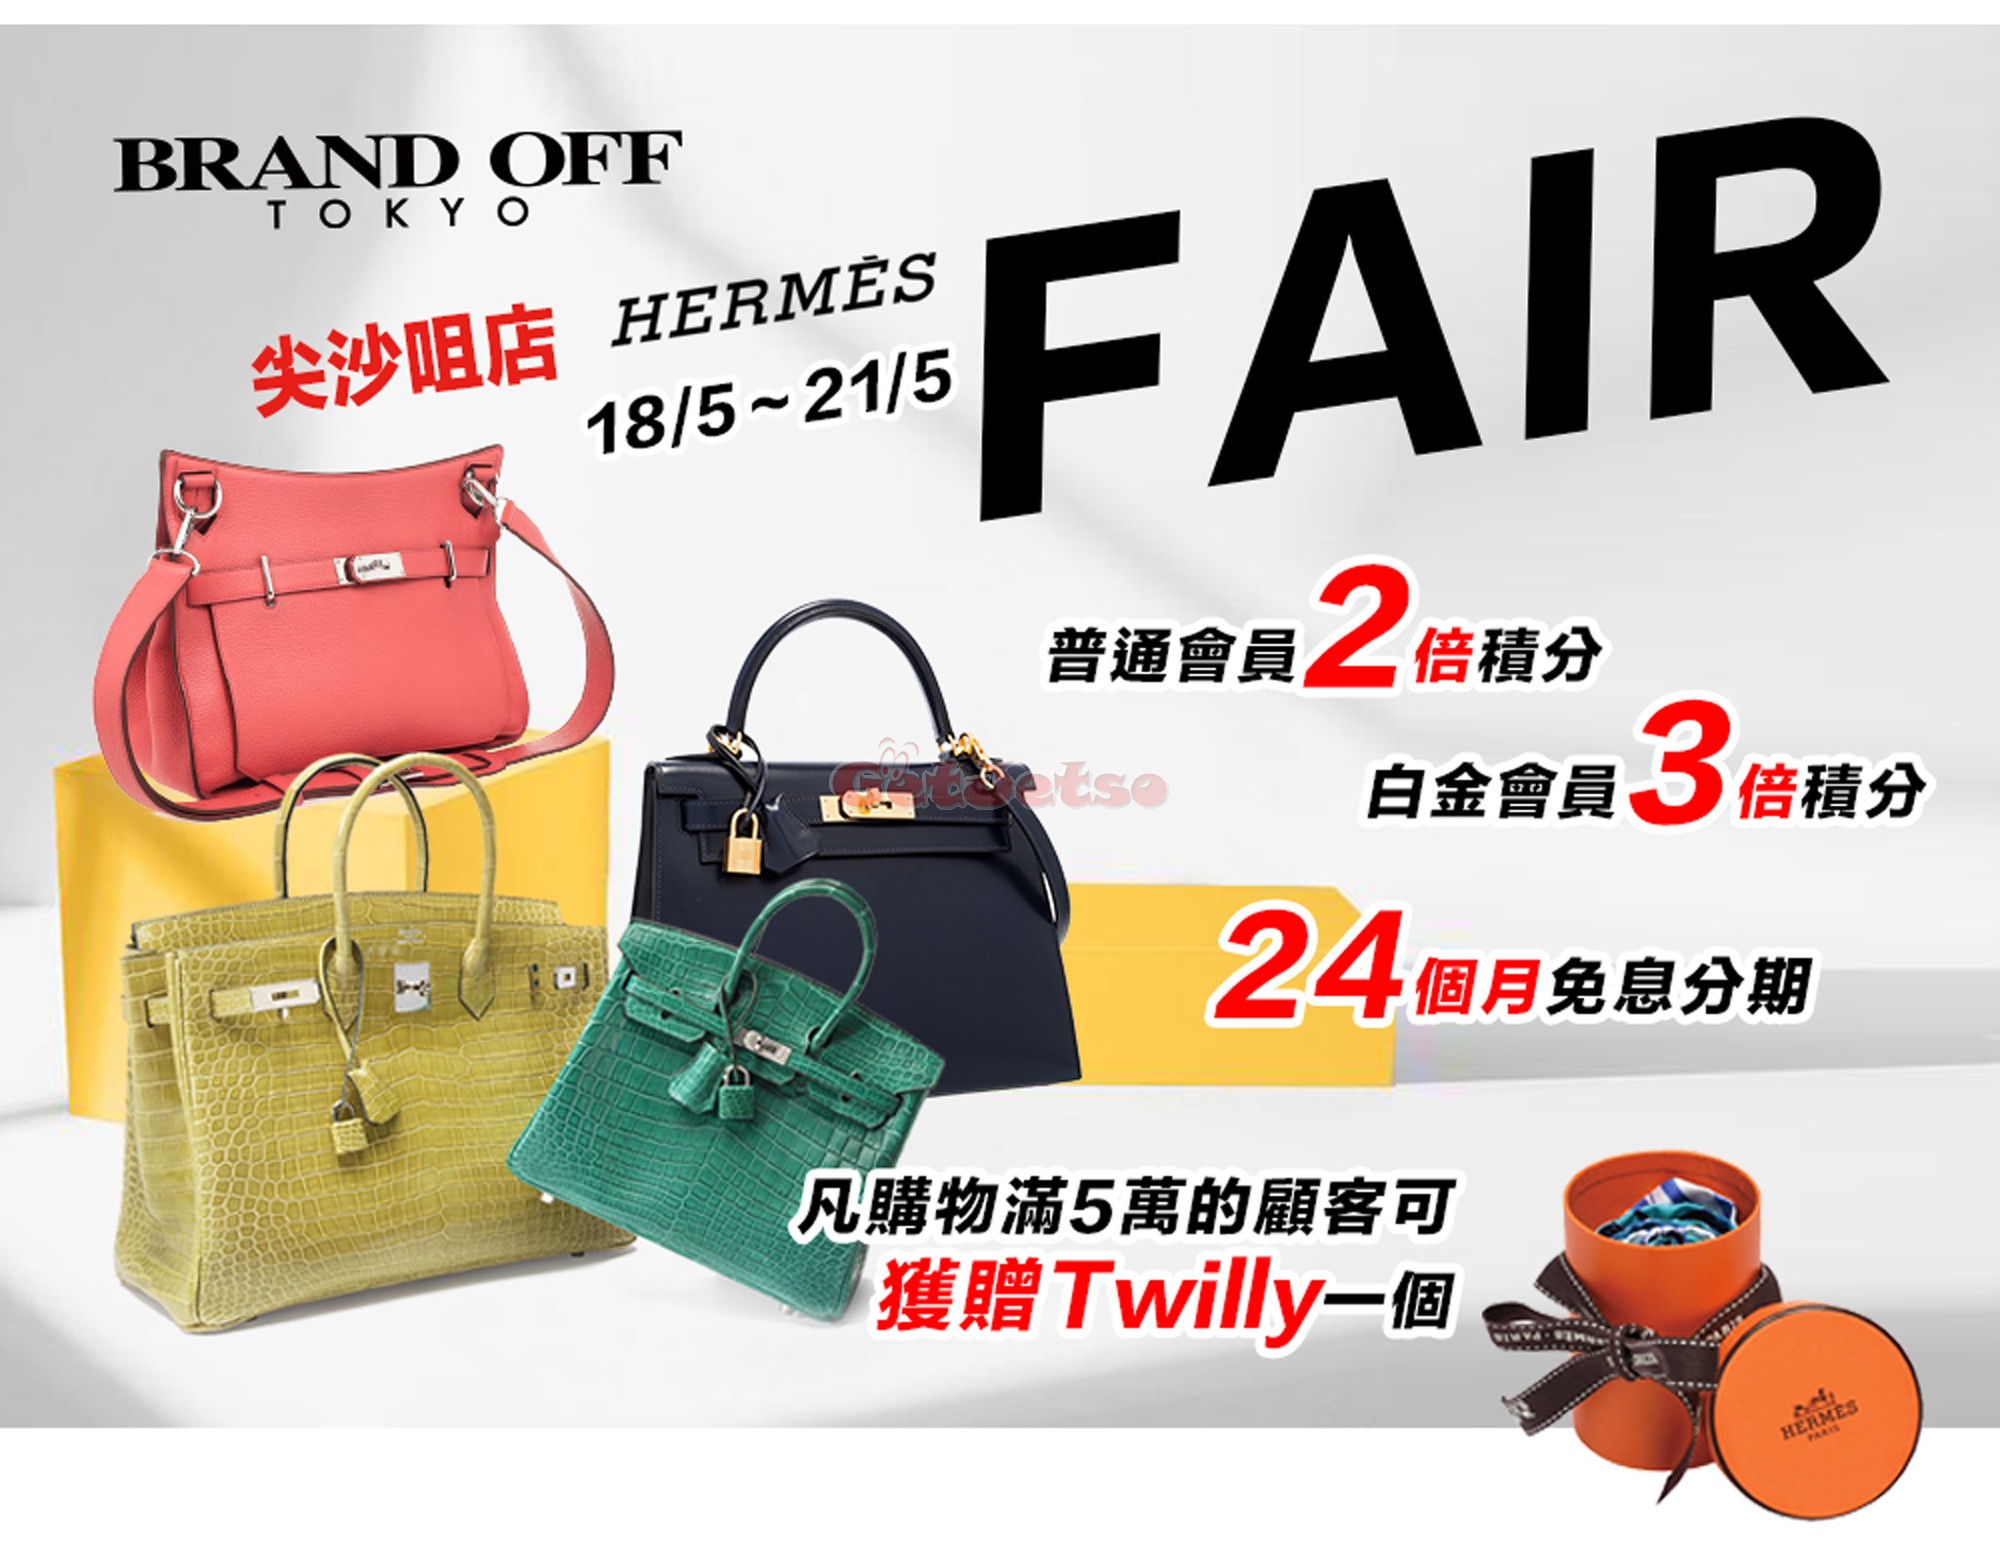 Brand Off 限定Hermes Fair減價優惠@尖沙咀店(18年5月18-21日)圖片1